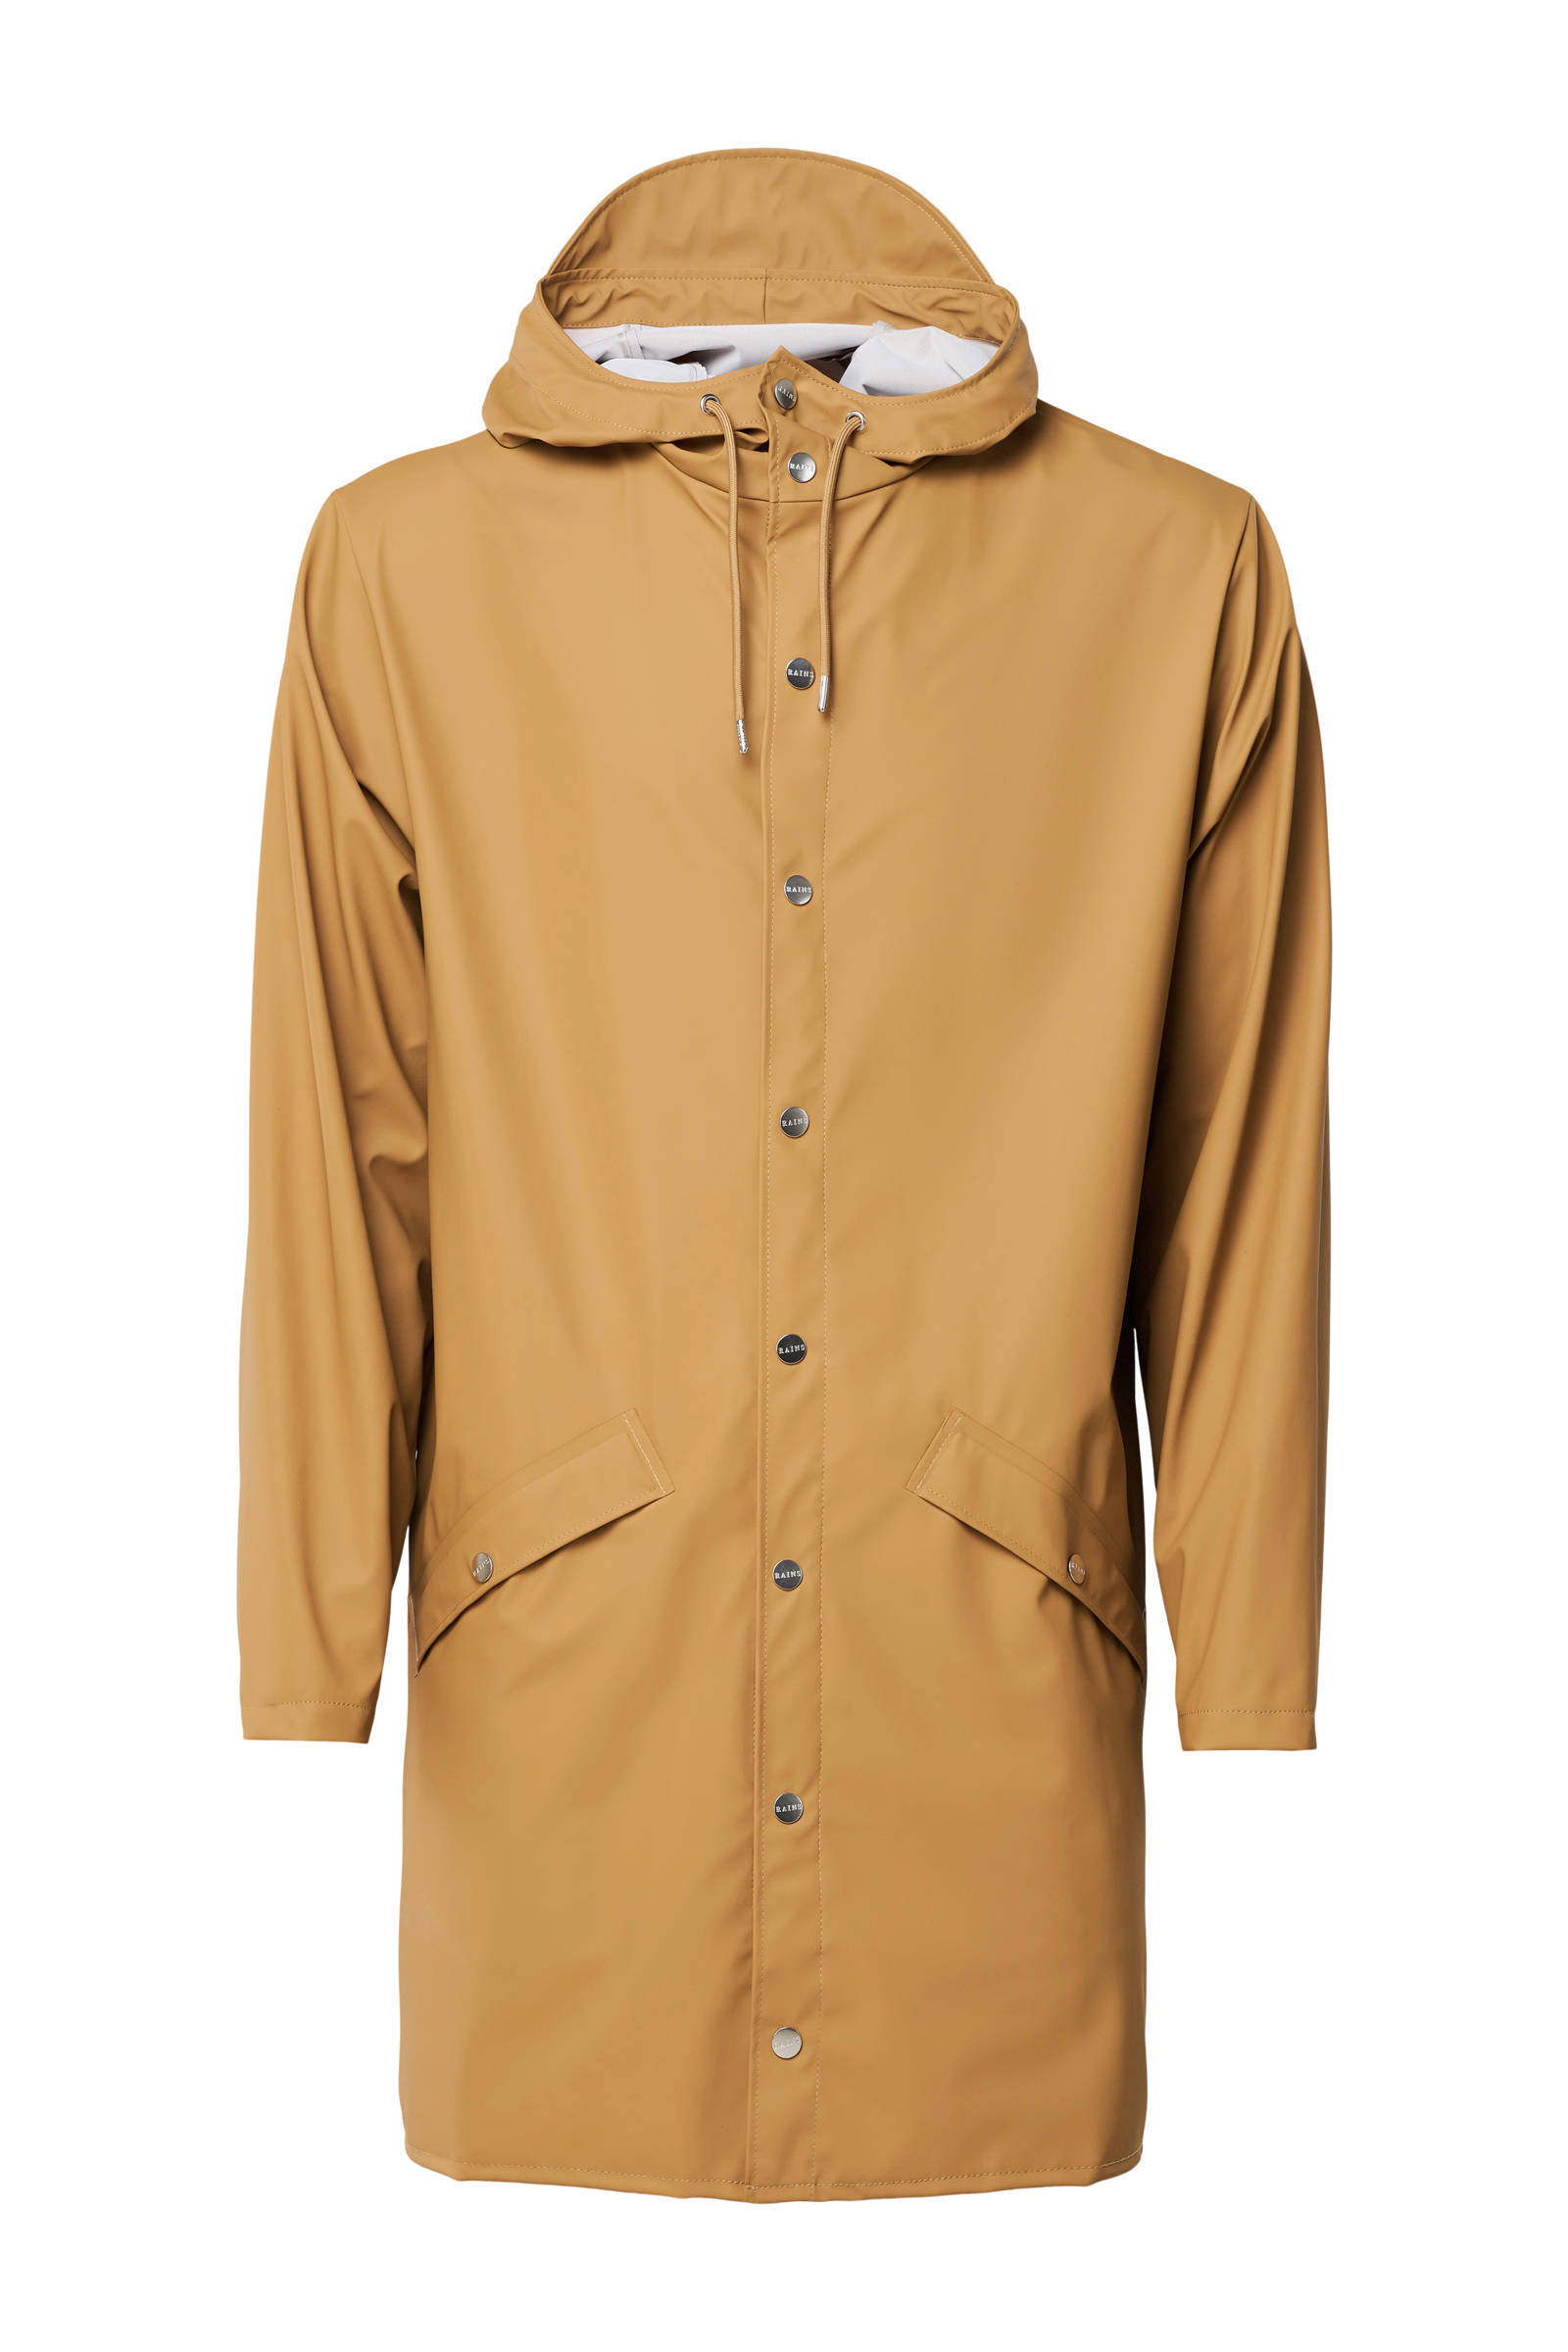 Rains Long Jacket Regenjas XS/S khaki online kopen